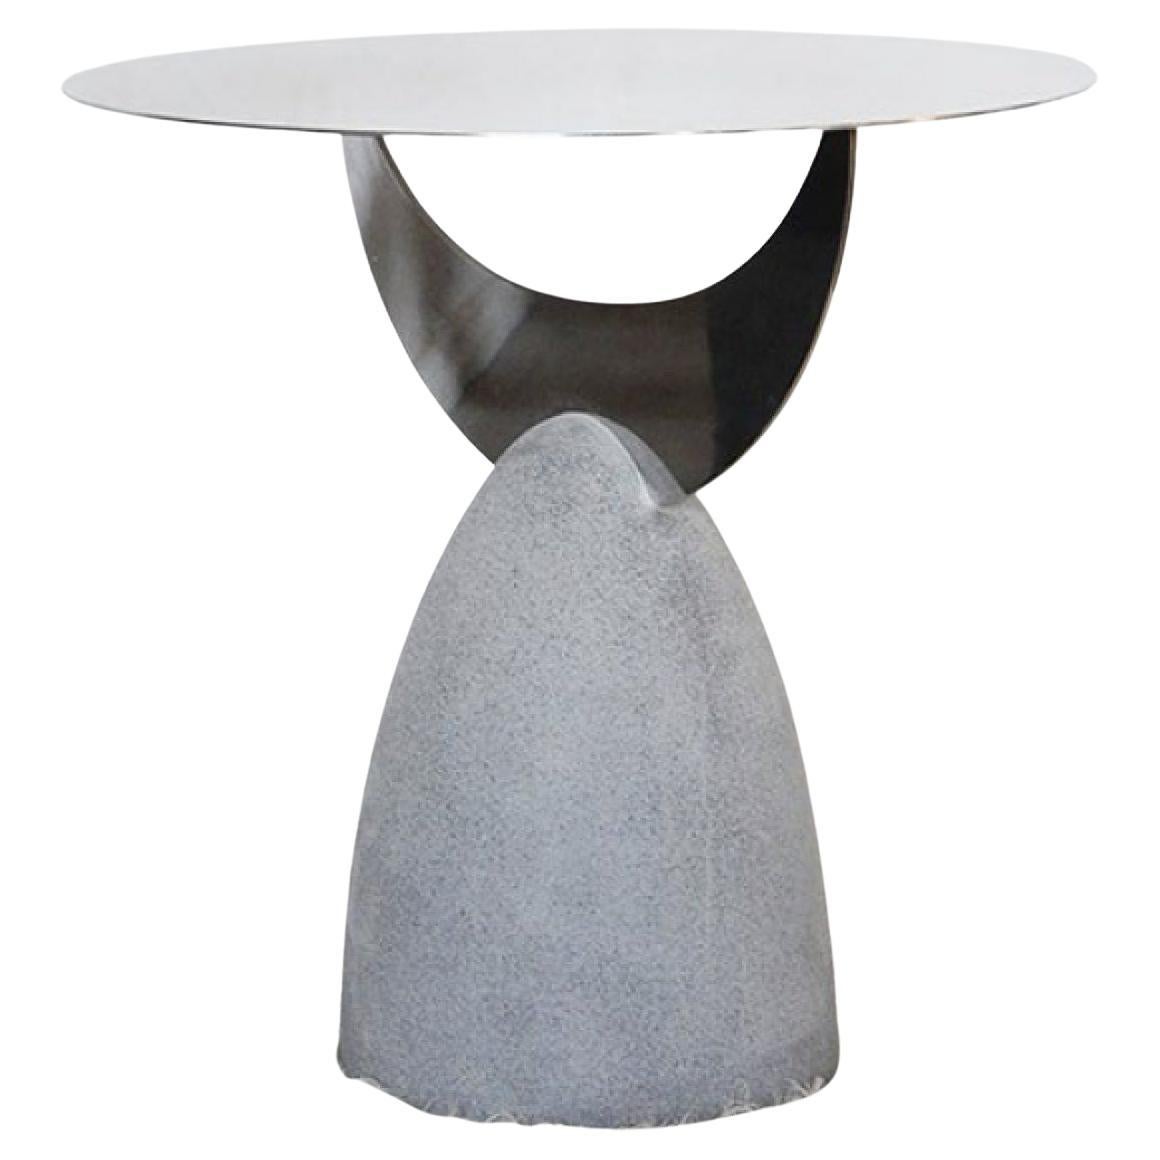 Table d'appoint avec base en pierre de basalte et plateau en acier inoxydable en vente